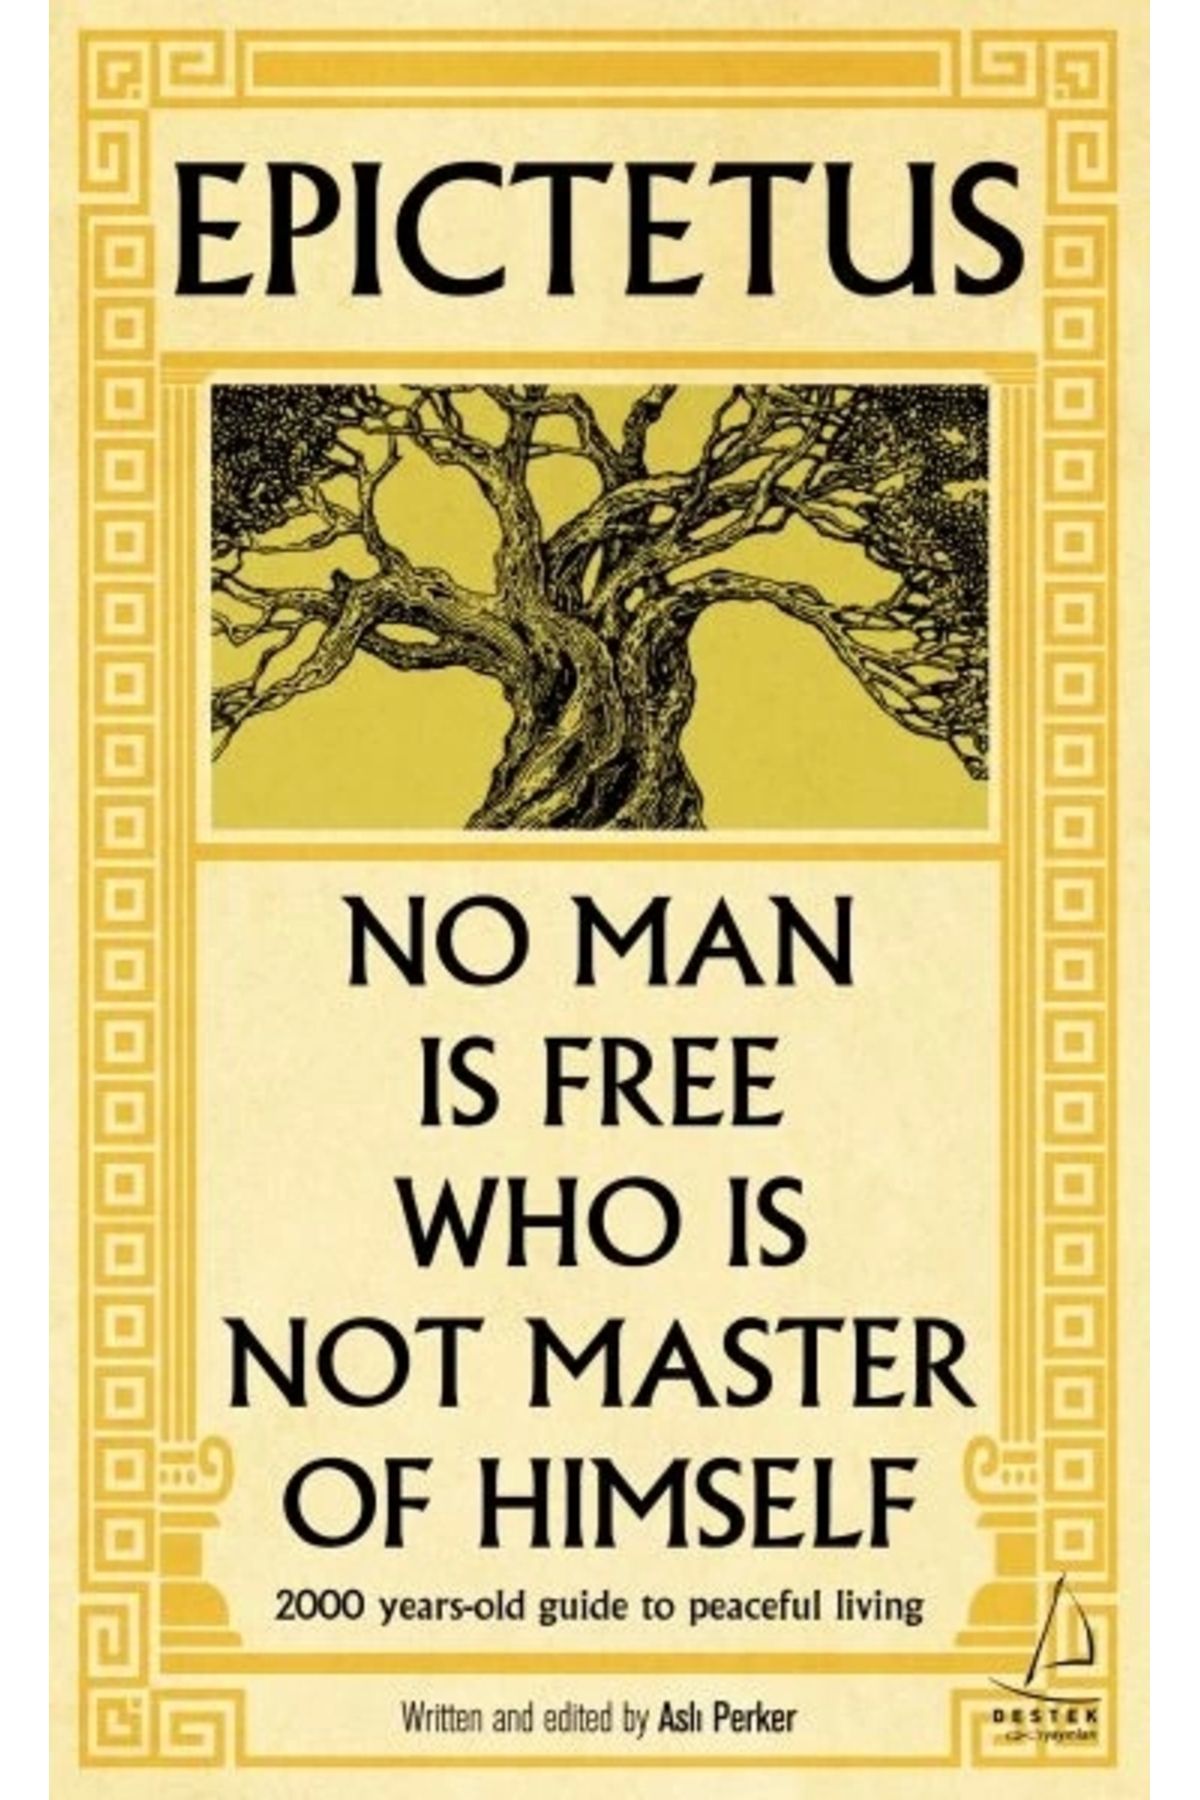 Destek Yayınları Epictetus - No Man is Free Who is Not Master of Himself